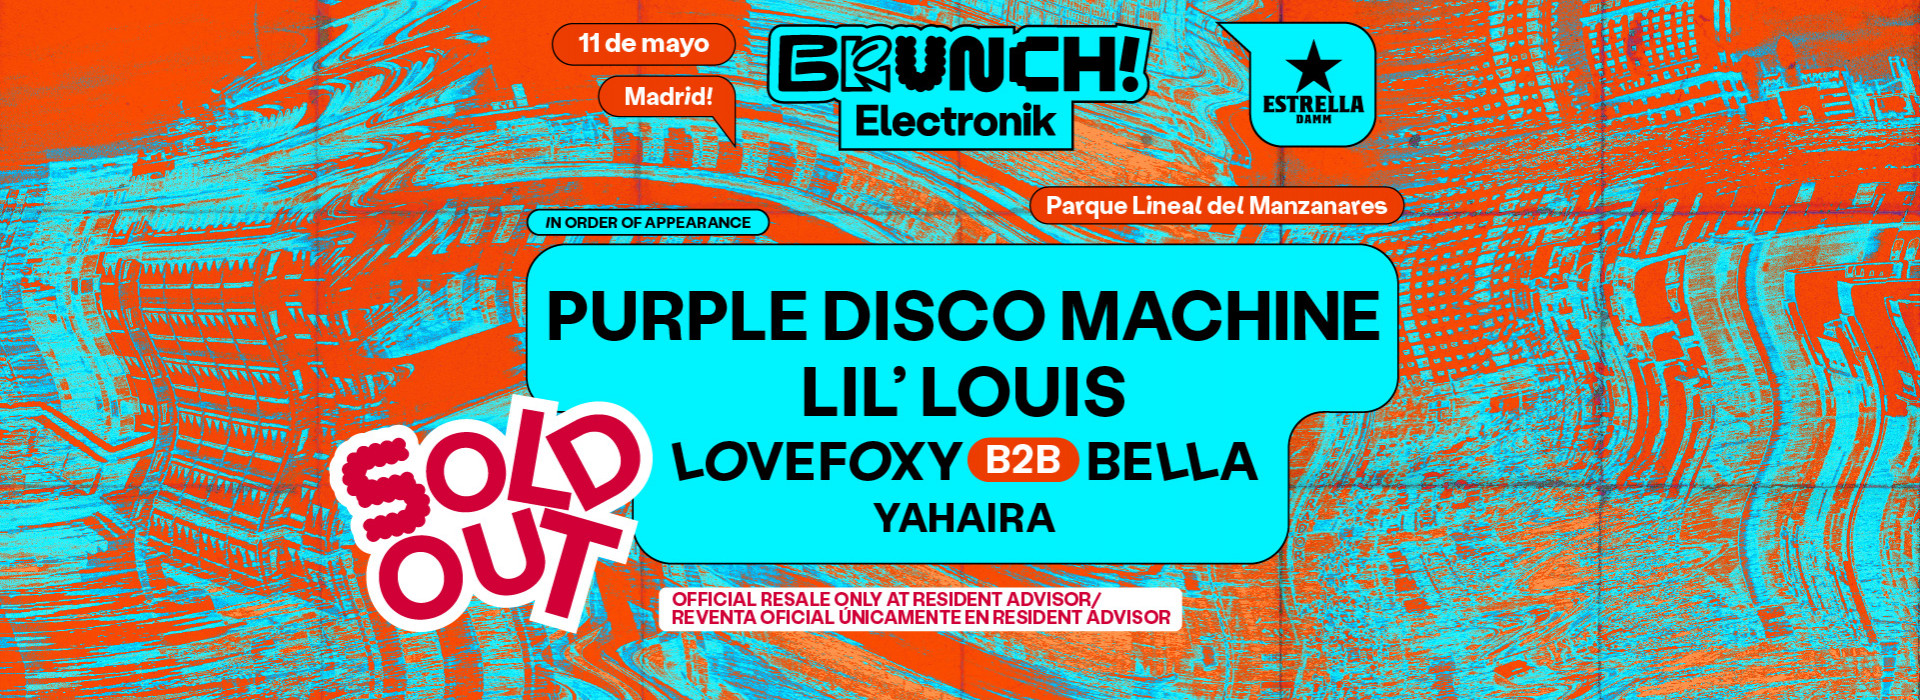 Brunch Electronik Madrid #2: Purple Disco Machine, Lil' Louis y más